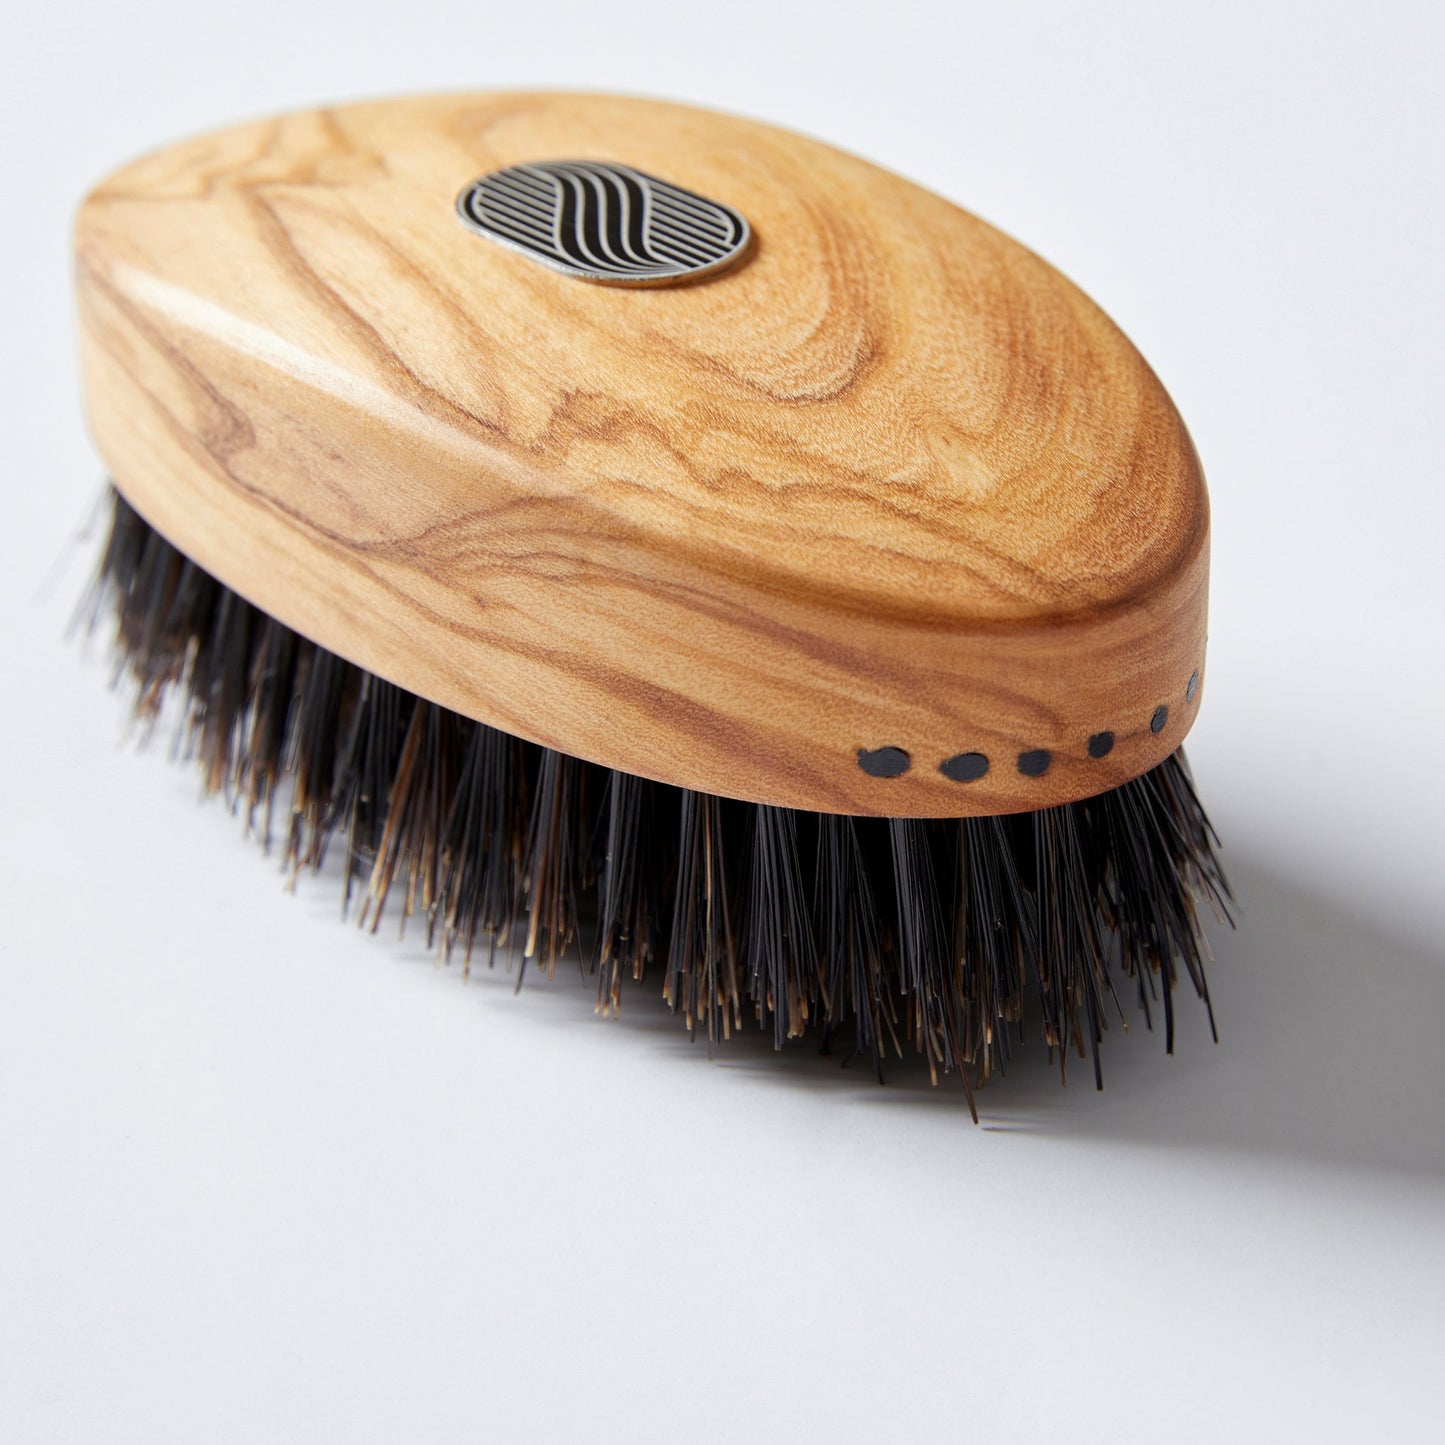 PRESTIGE - The 100% handmade hair and beard brush